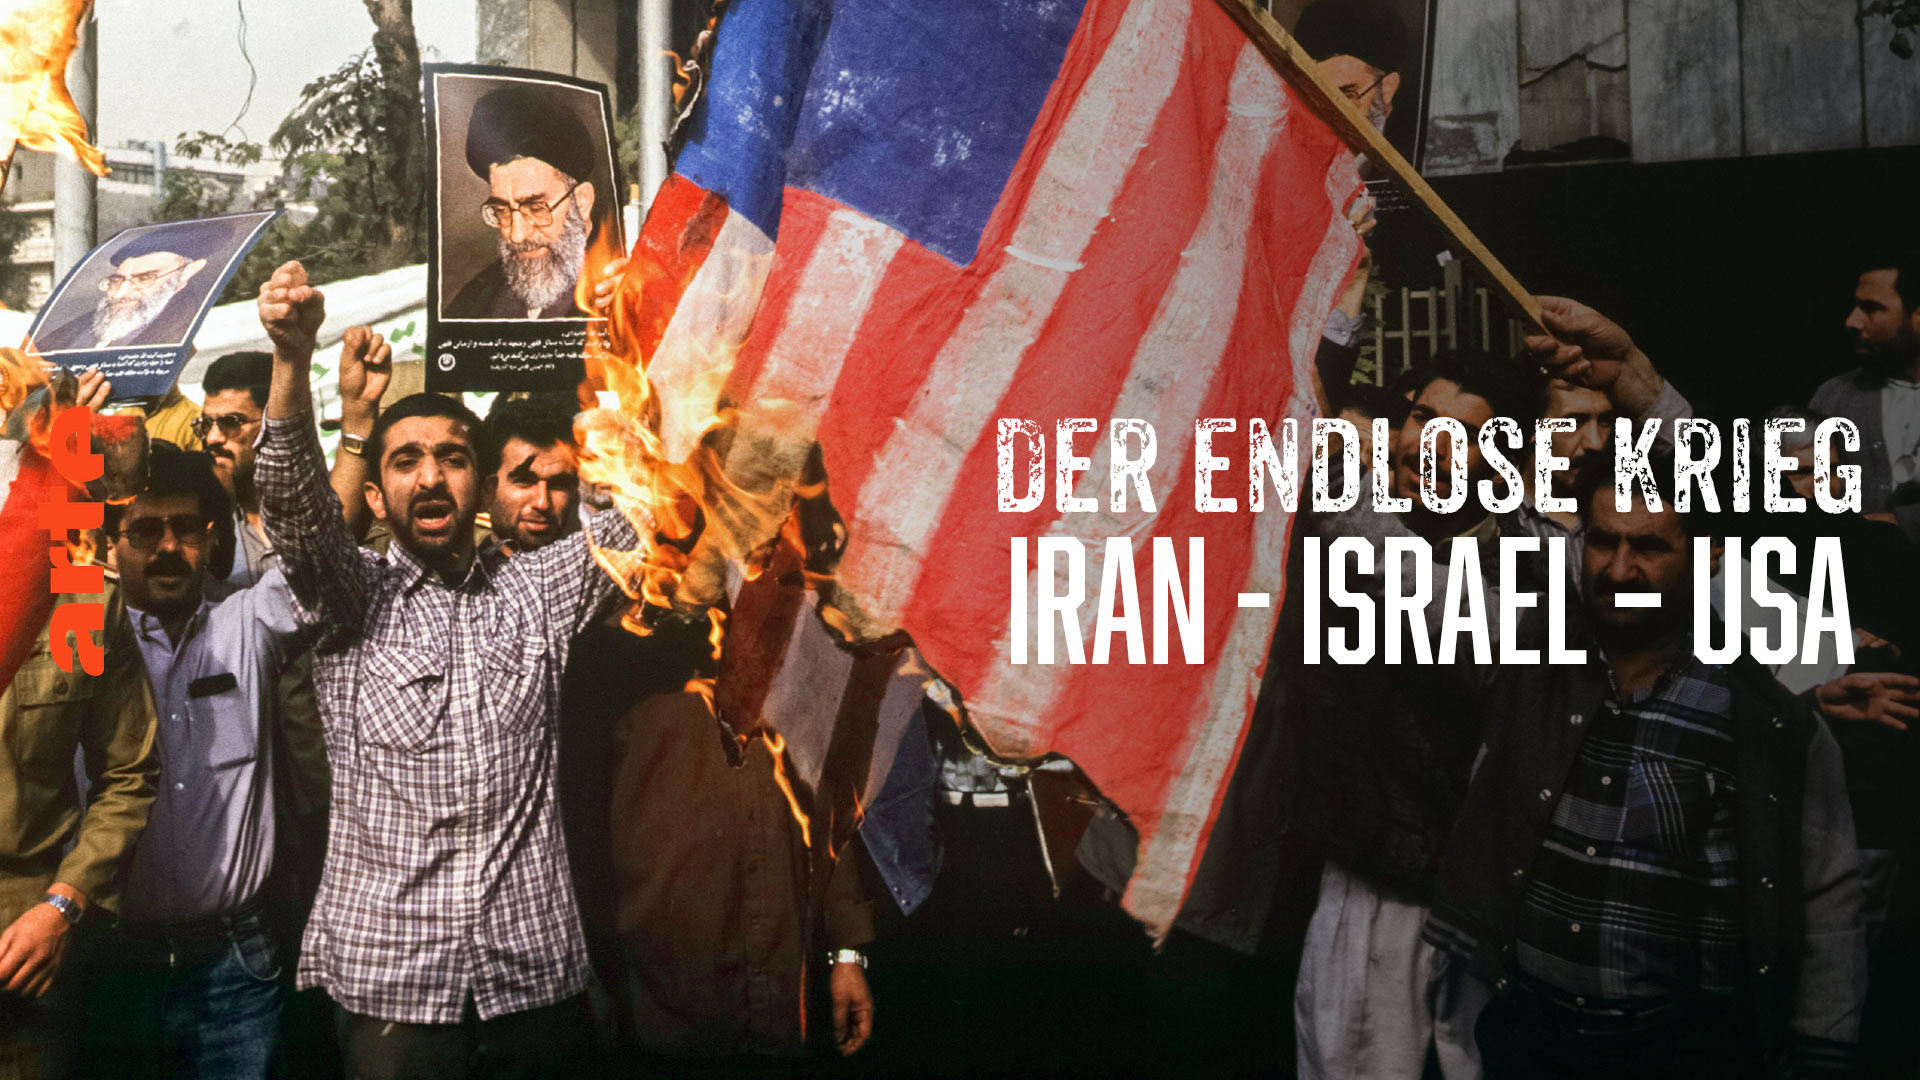 Der endlose Krieg: Iran - Israel - USA (1/2)